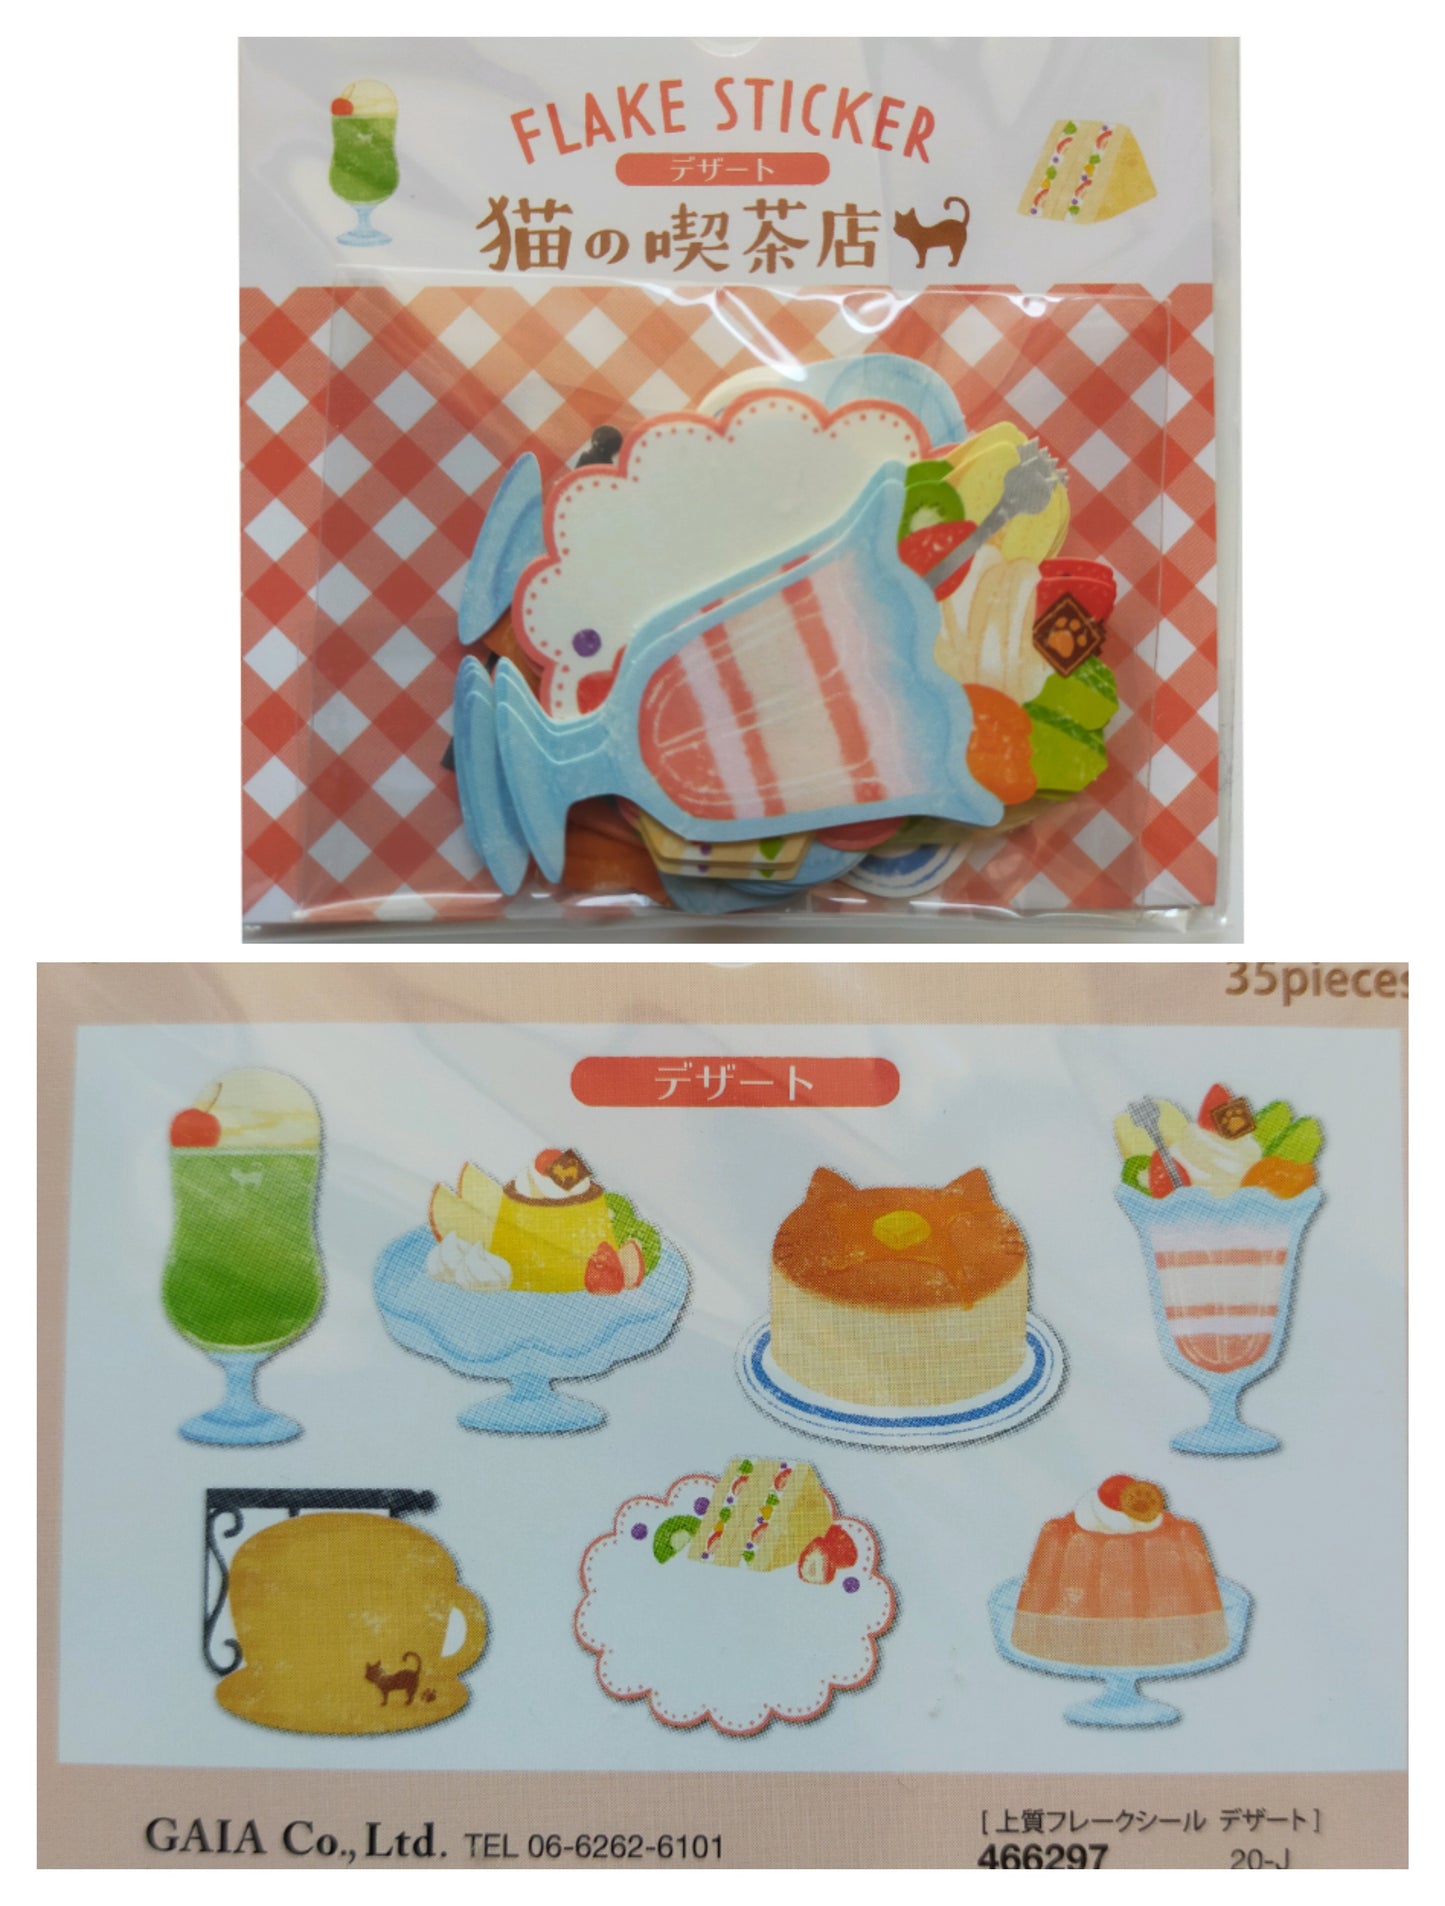 Flake Sticker Cat coffee shop 7designs*5pieces,GAIA _Red Dessert / Green Snack